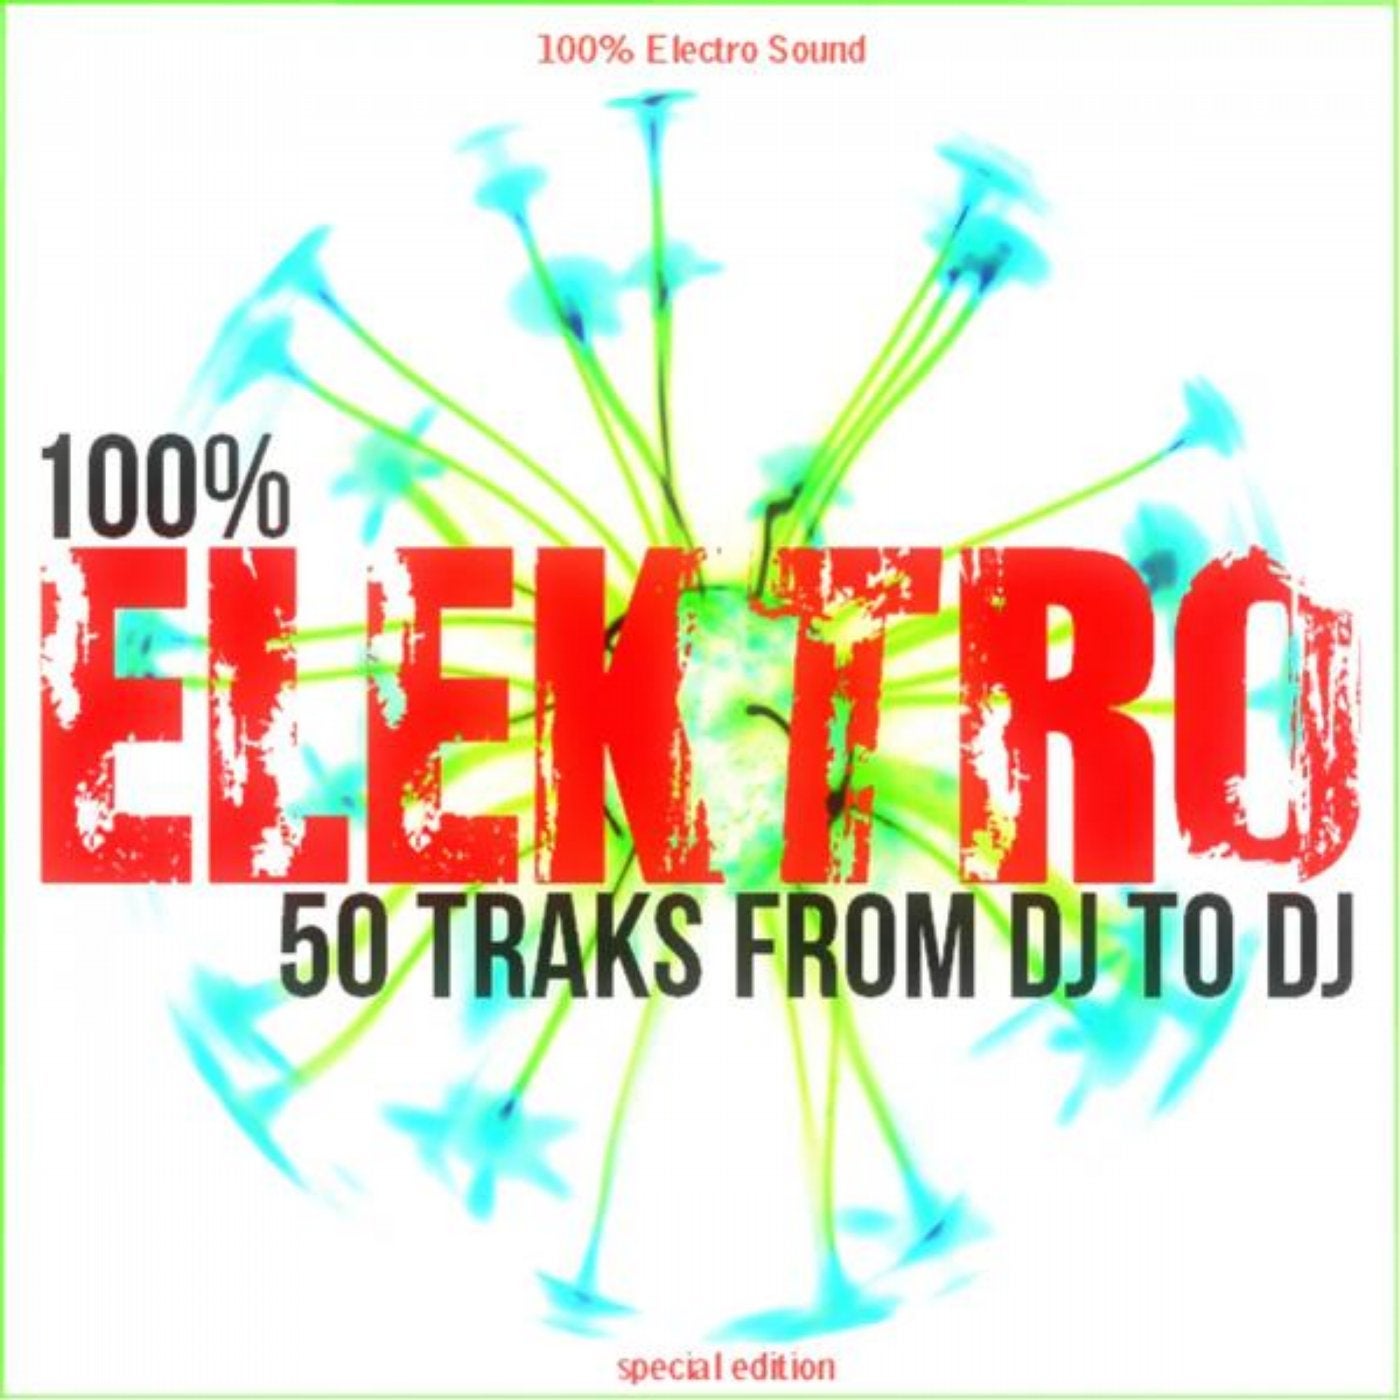 100%% Elektro (From DJ to DJ)